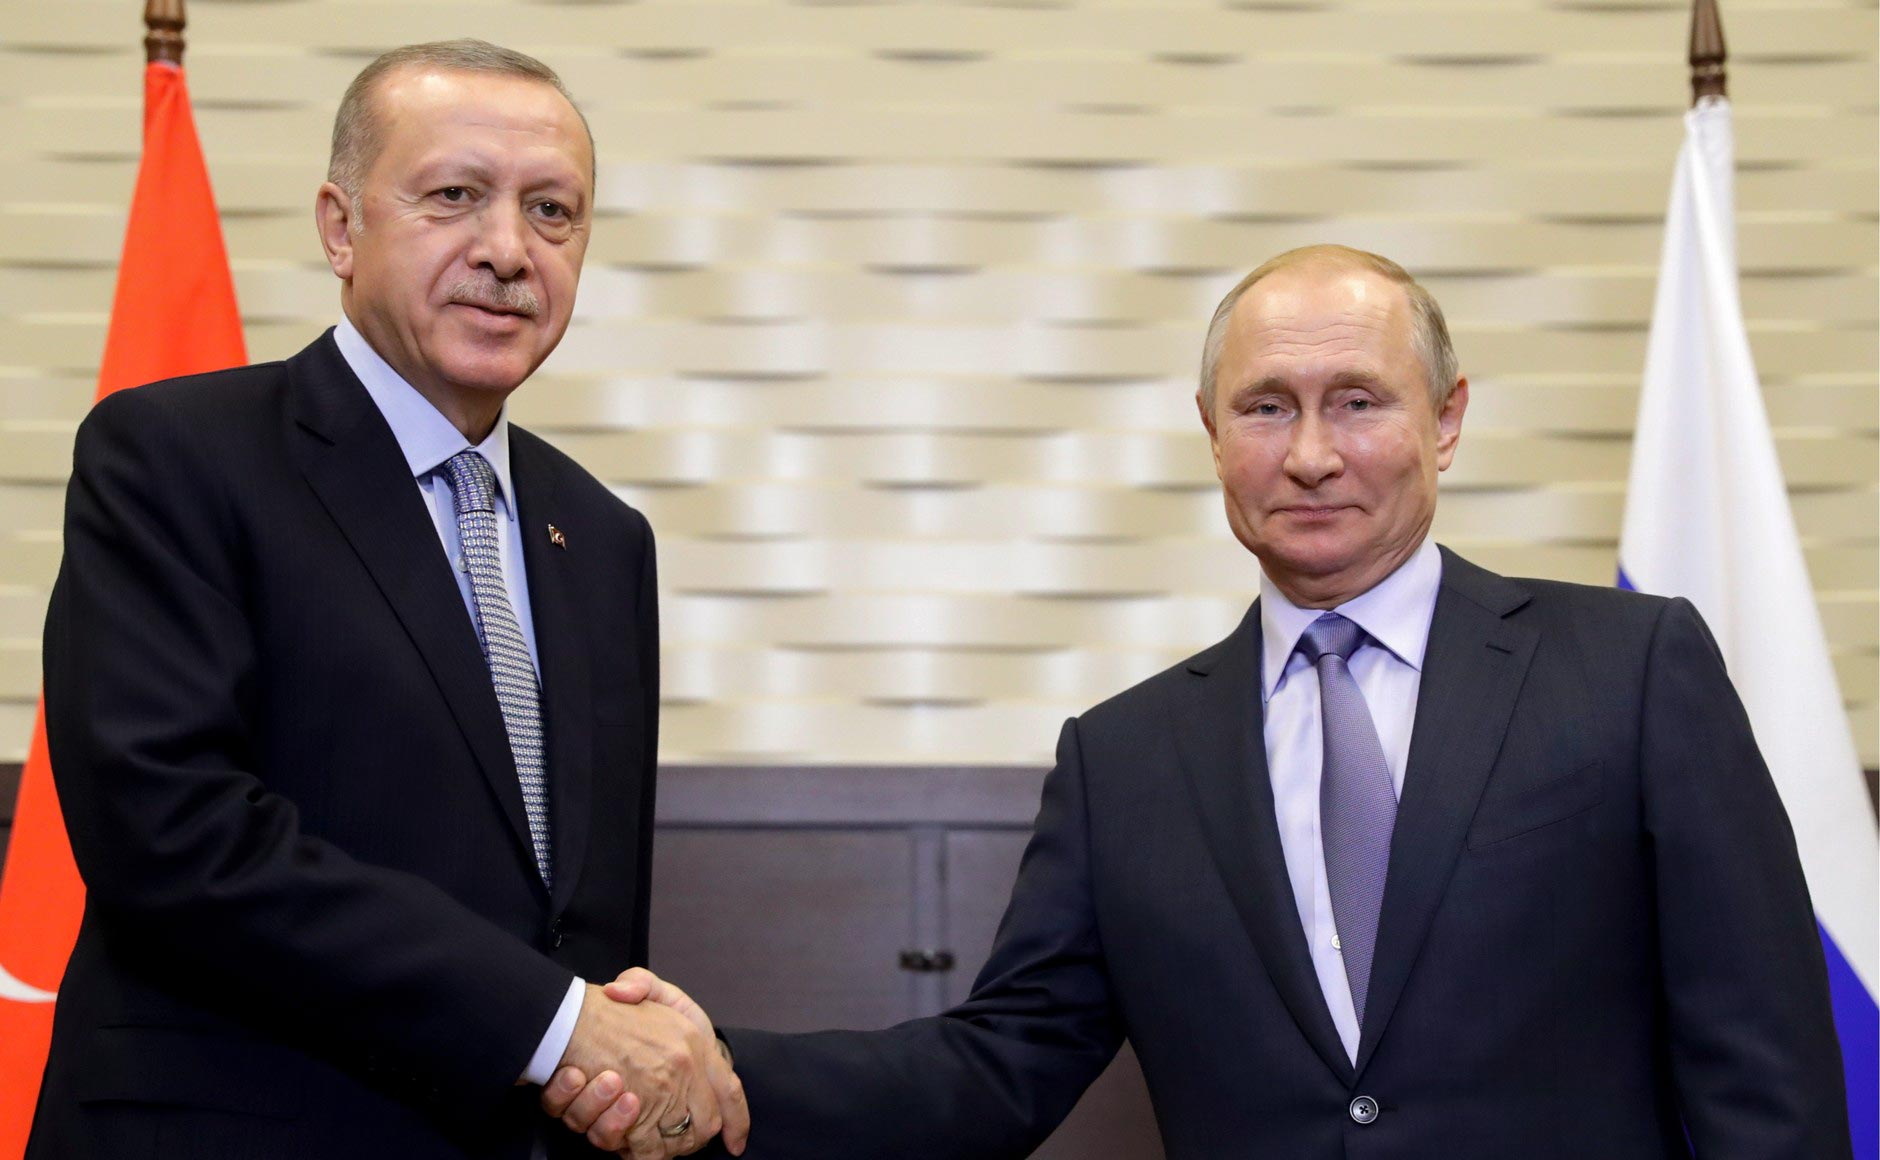 Erdogan and Putin meet on Syria